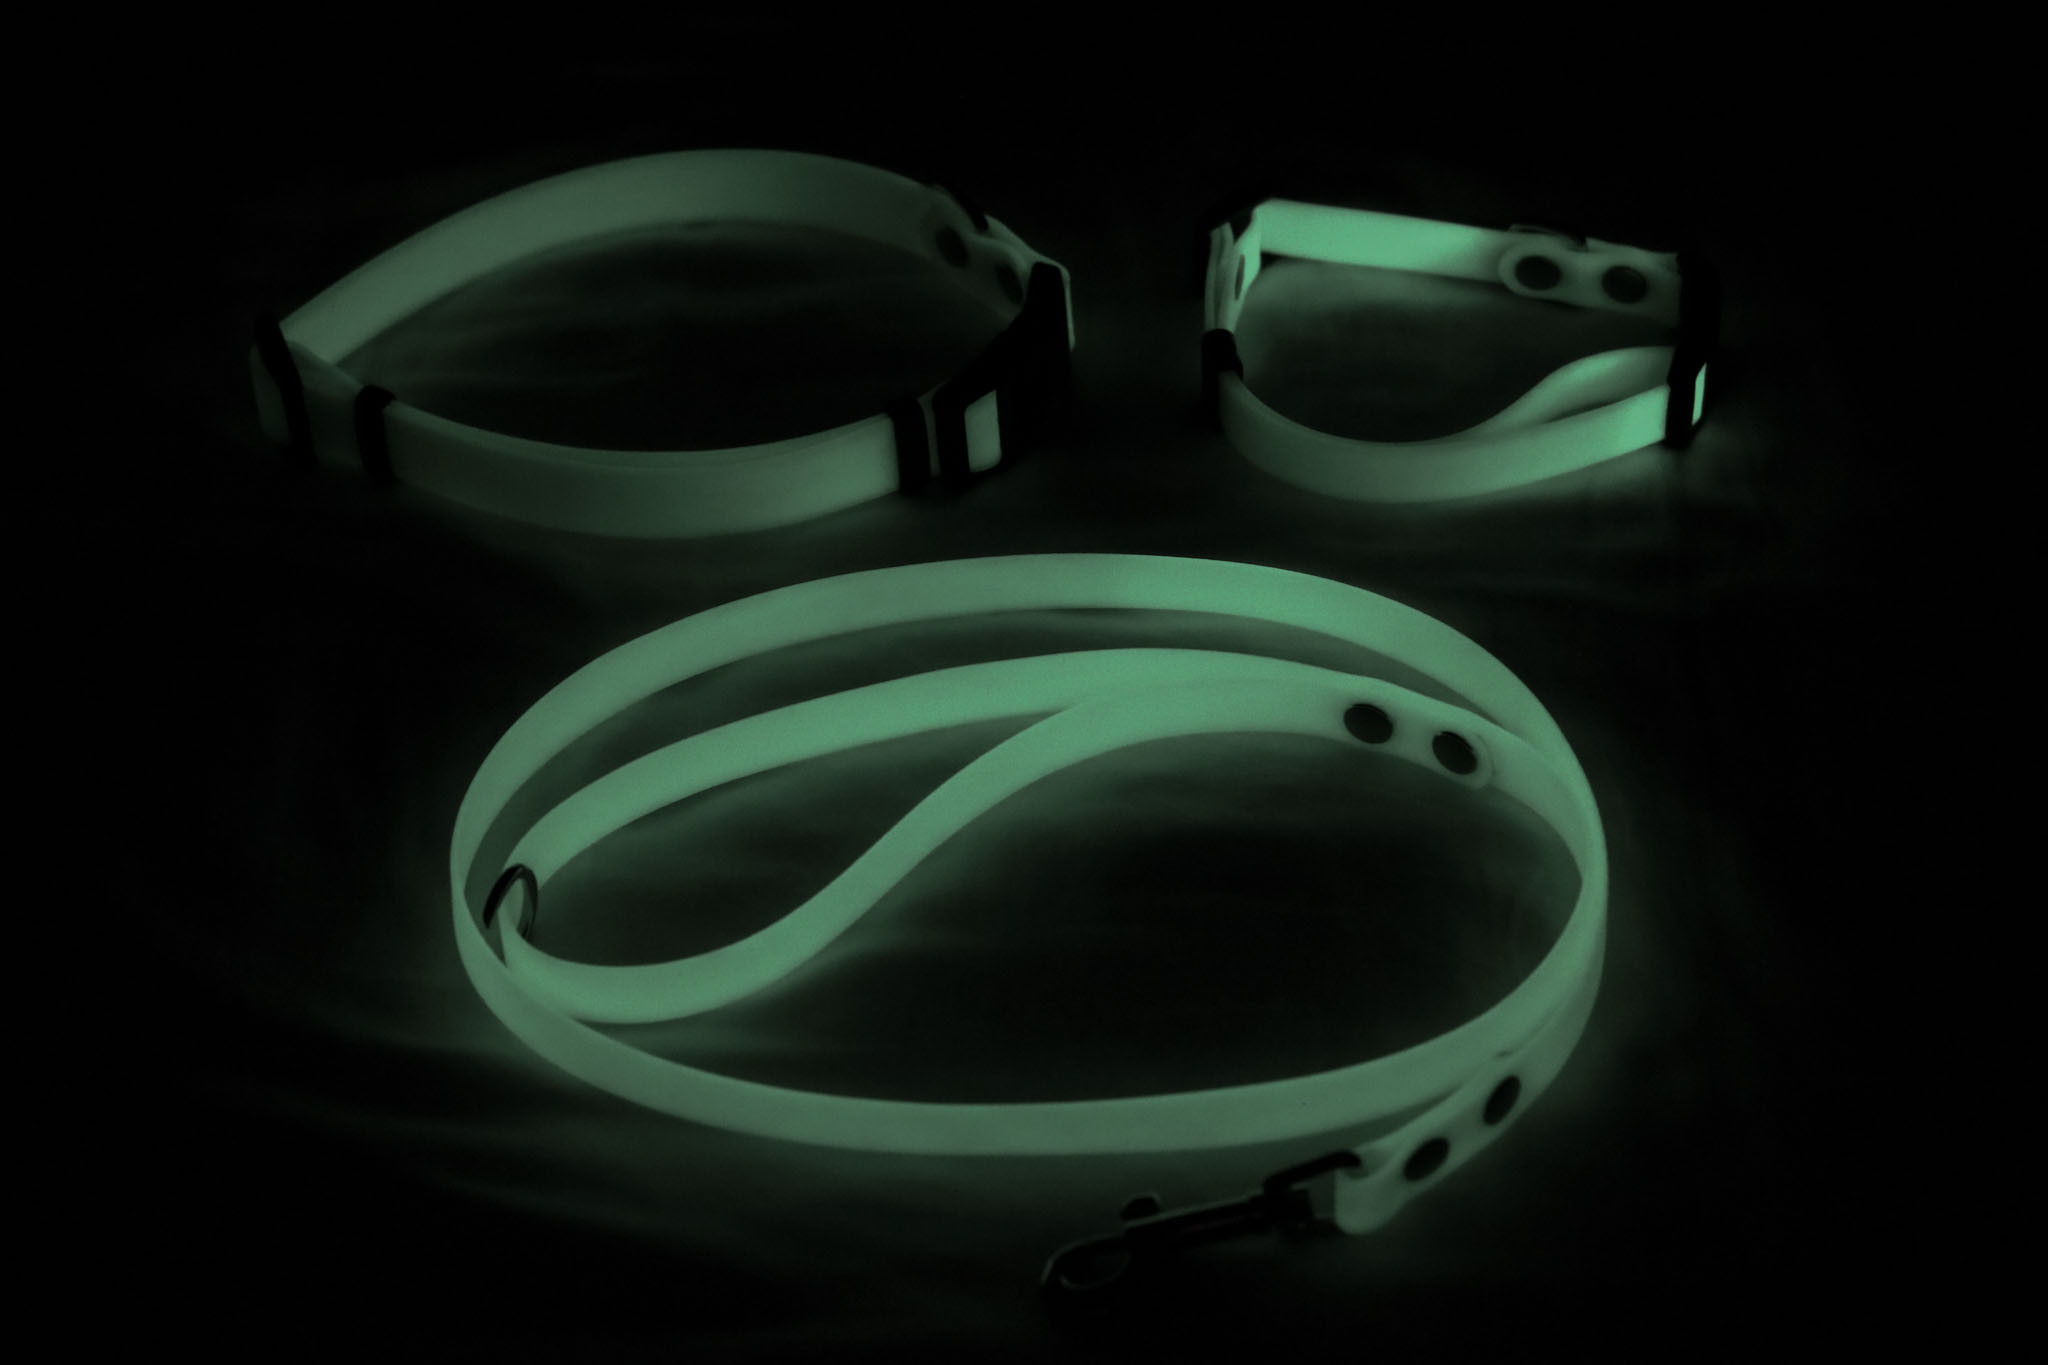 Halsband of looplijn Luca anti-slip rubber glow in the dark